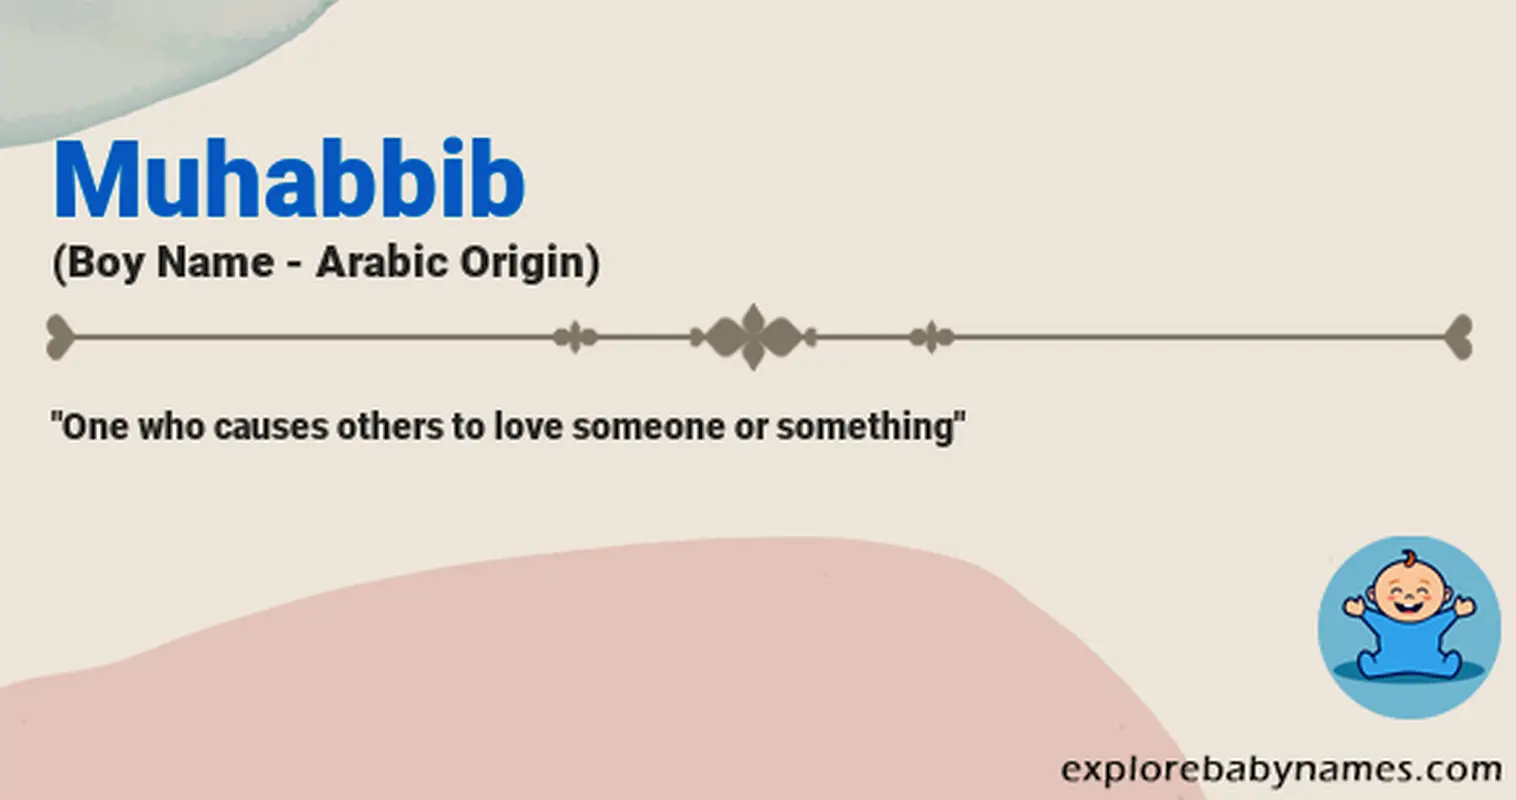 Meaning of Muhabbib